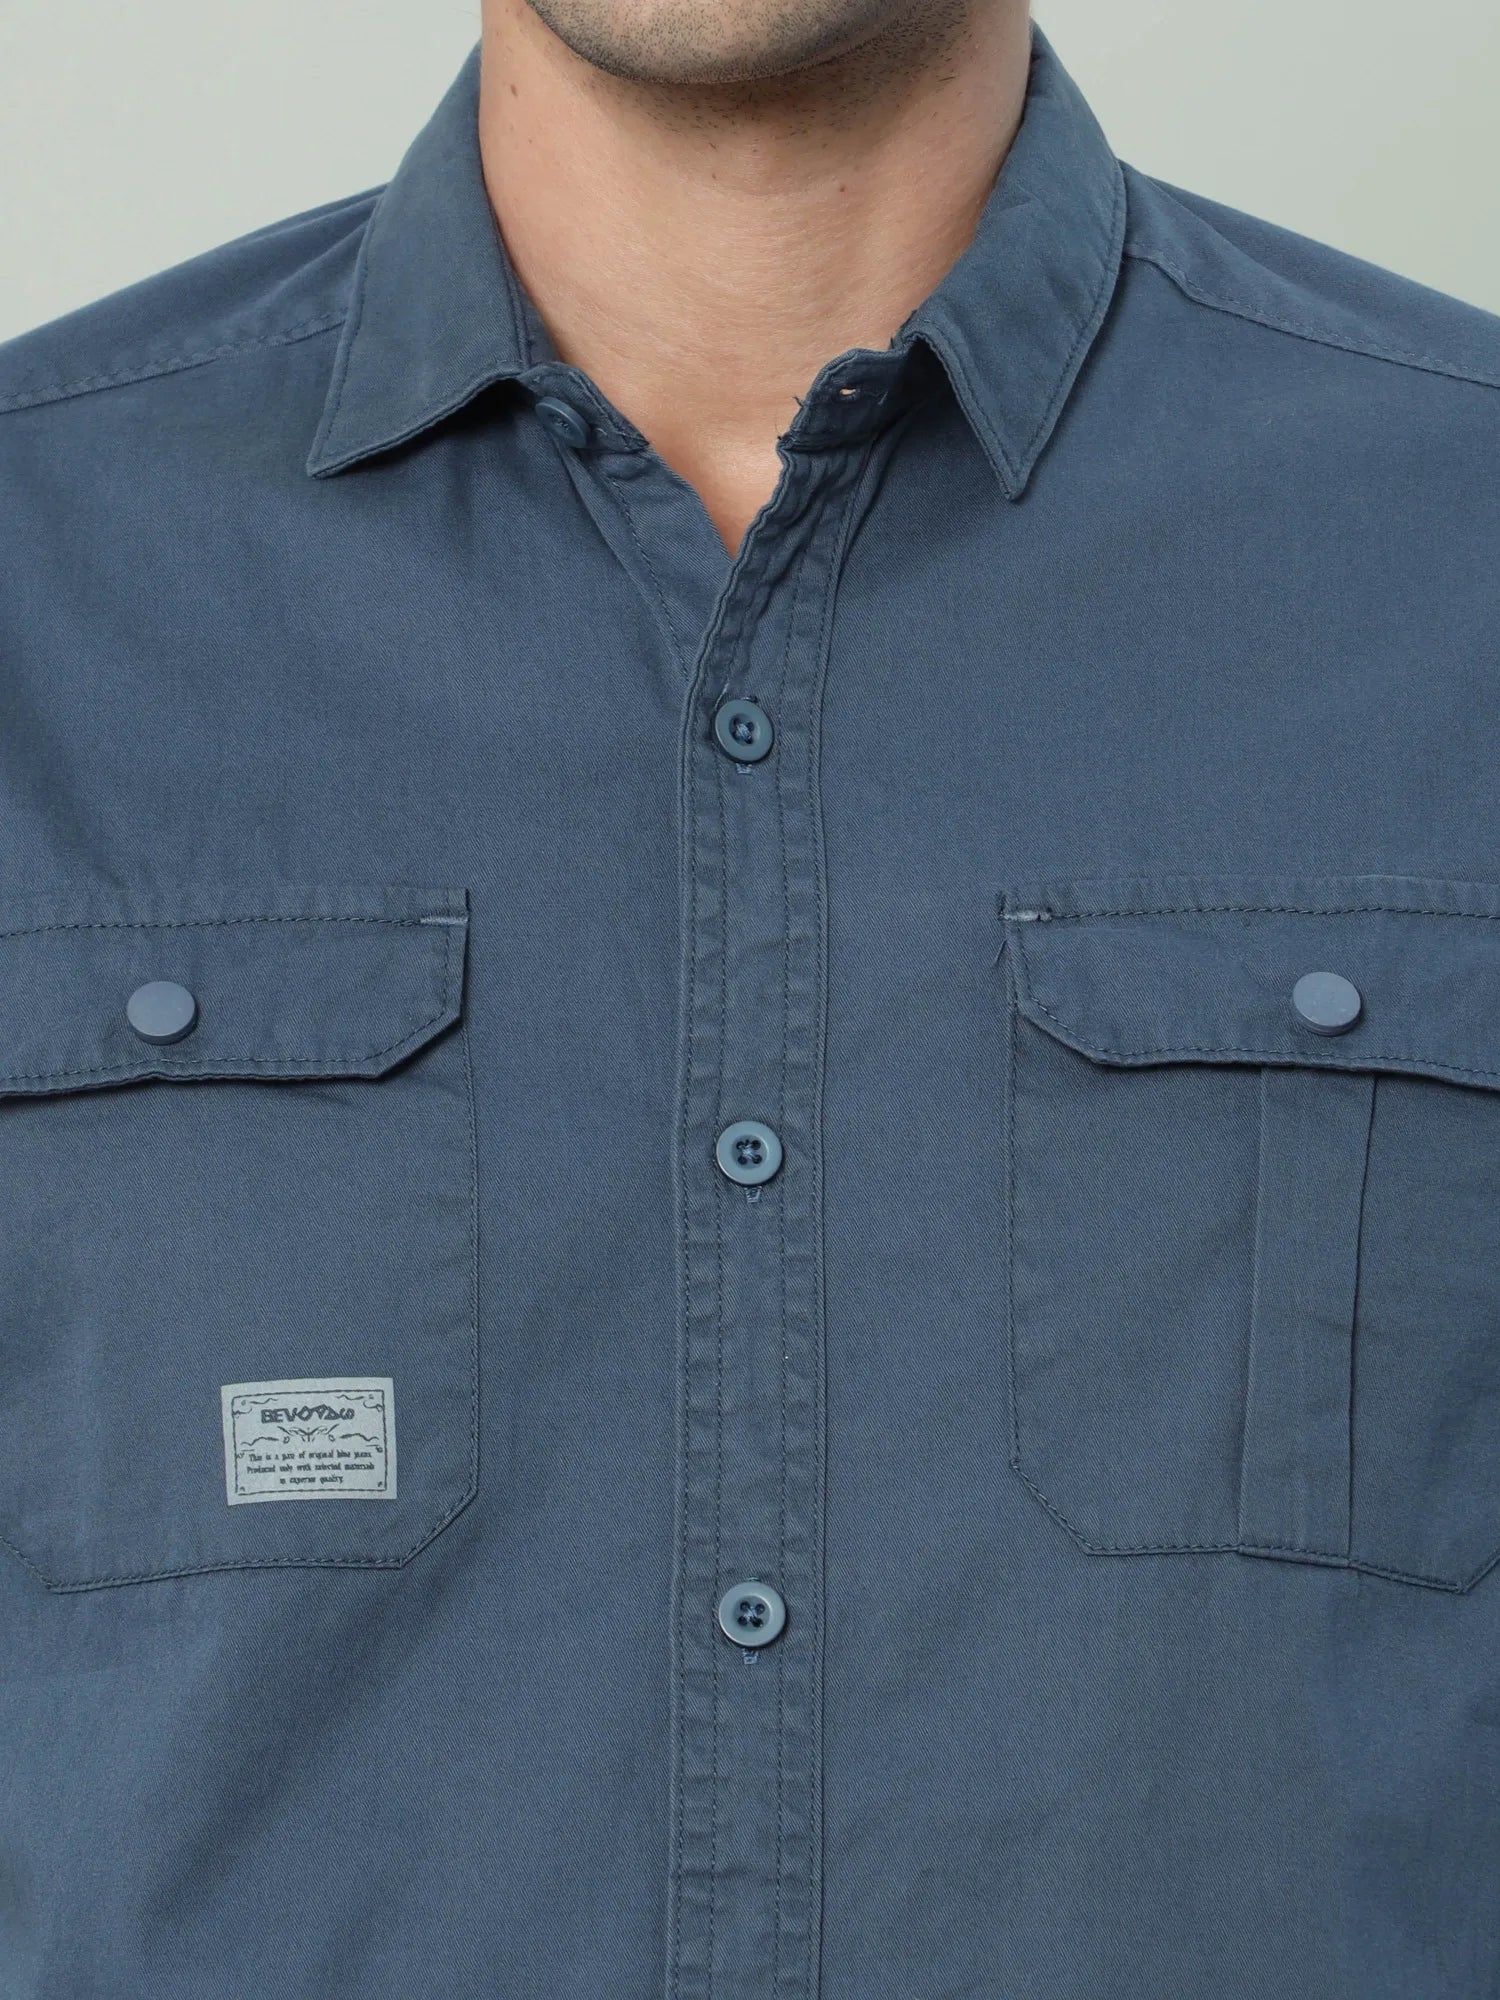 Blue Cargo Shirt for Men